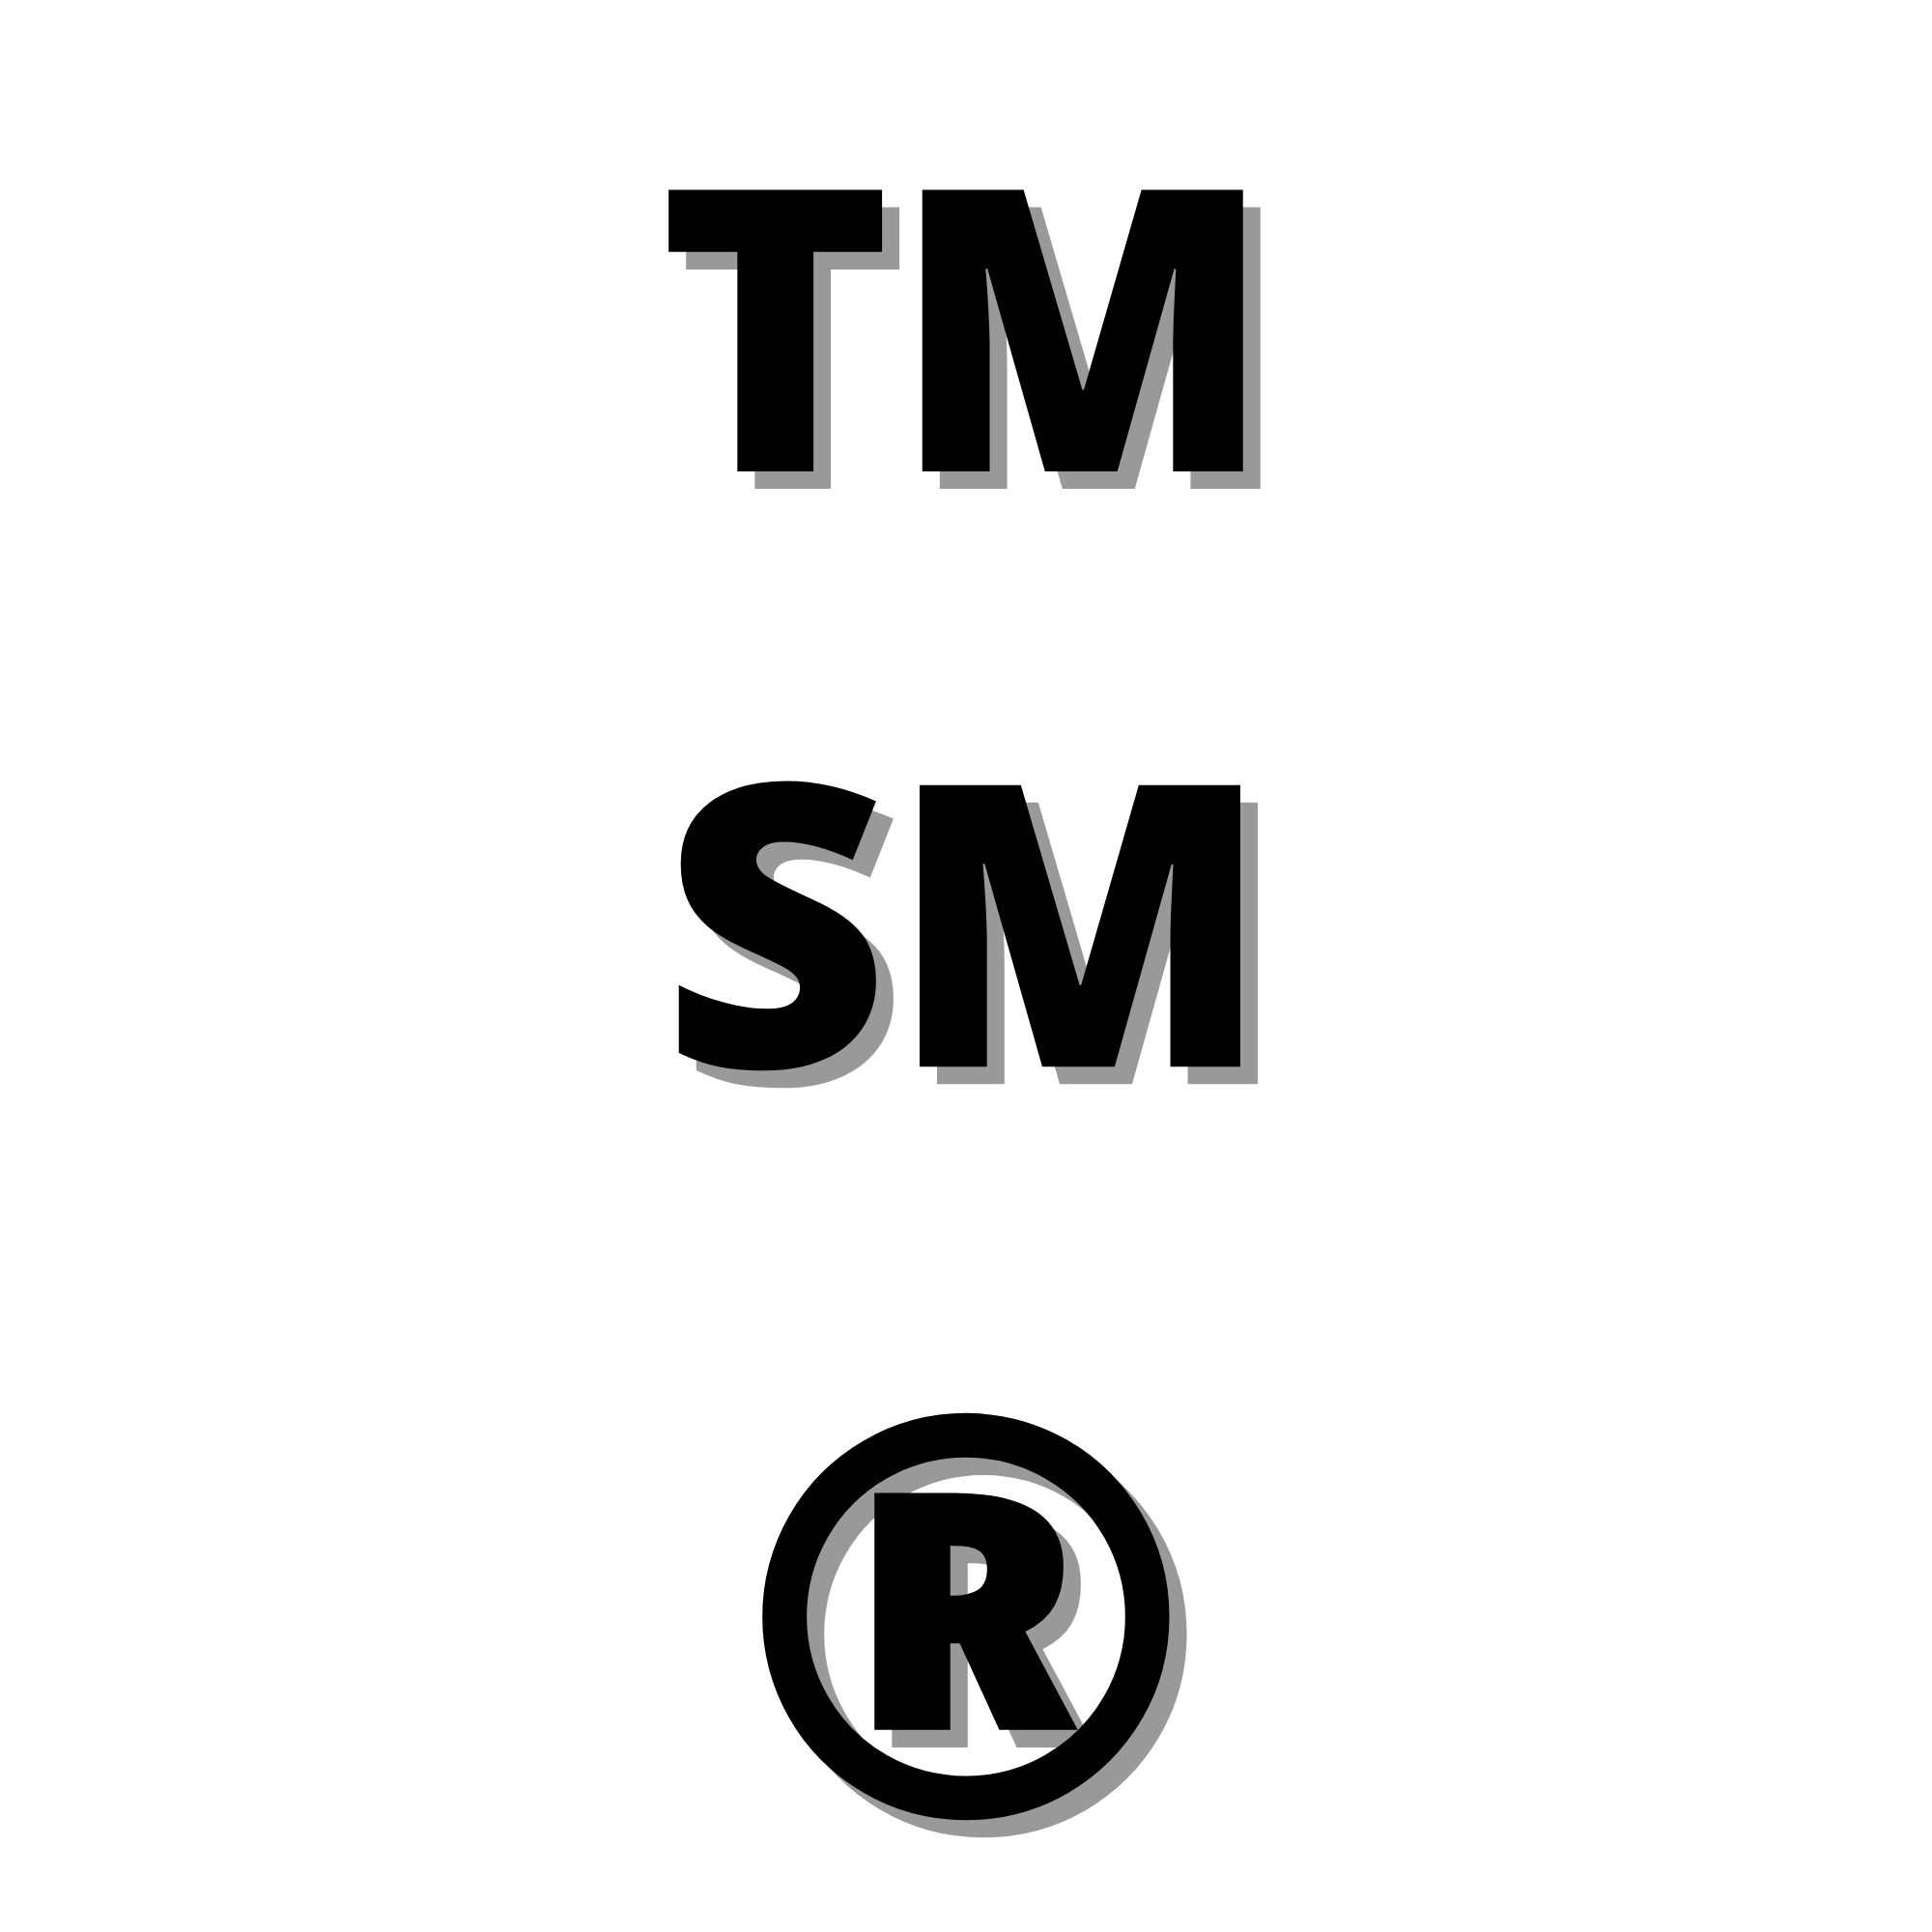 unregistered trademark symbol